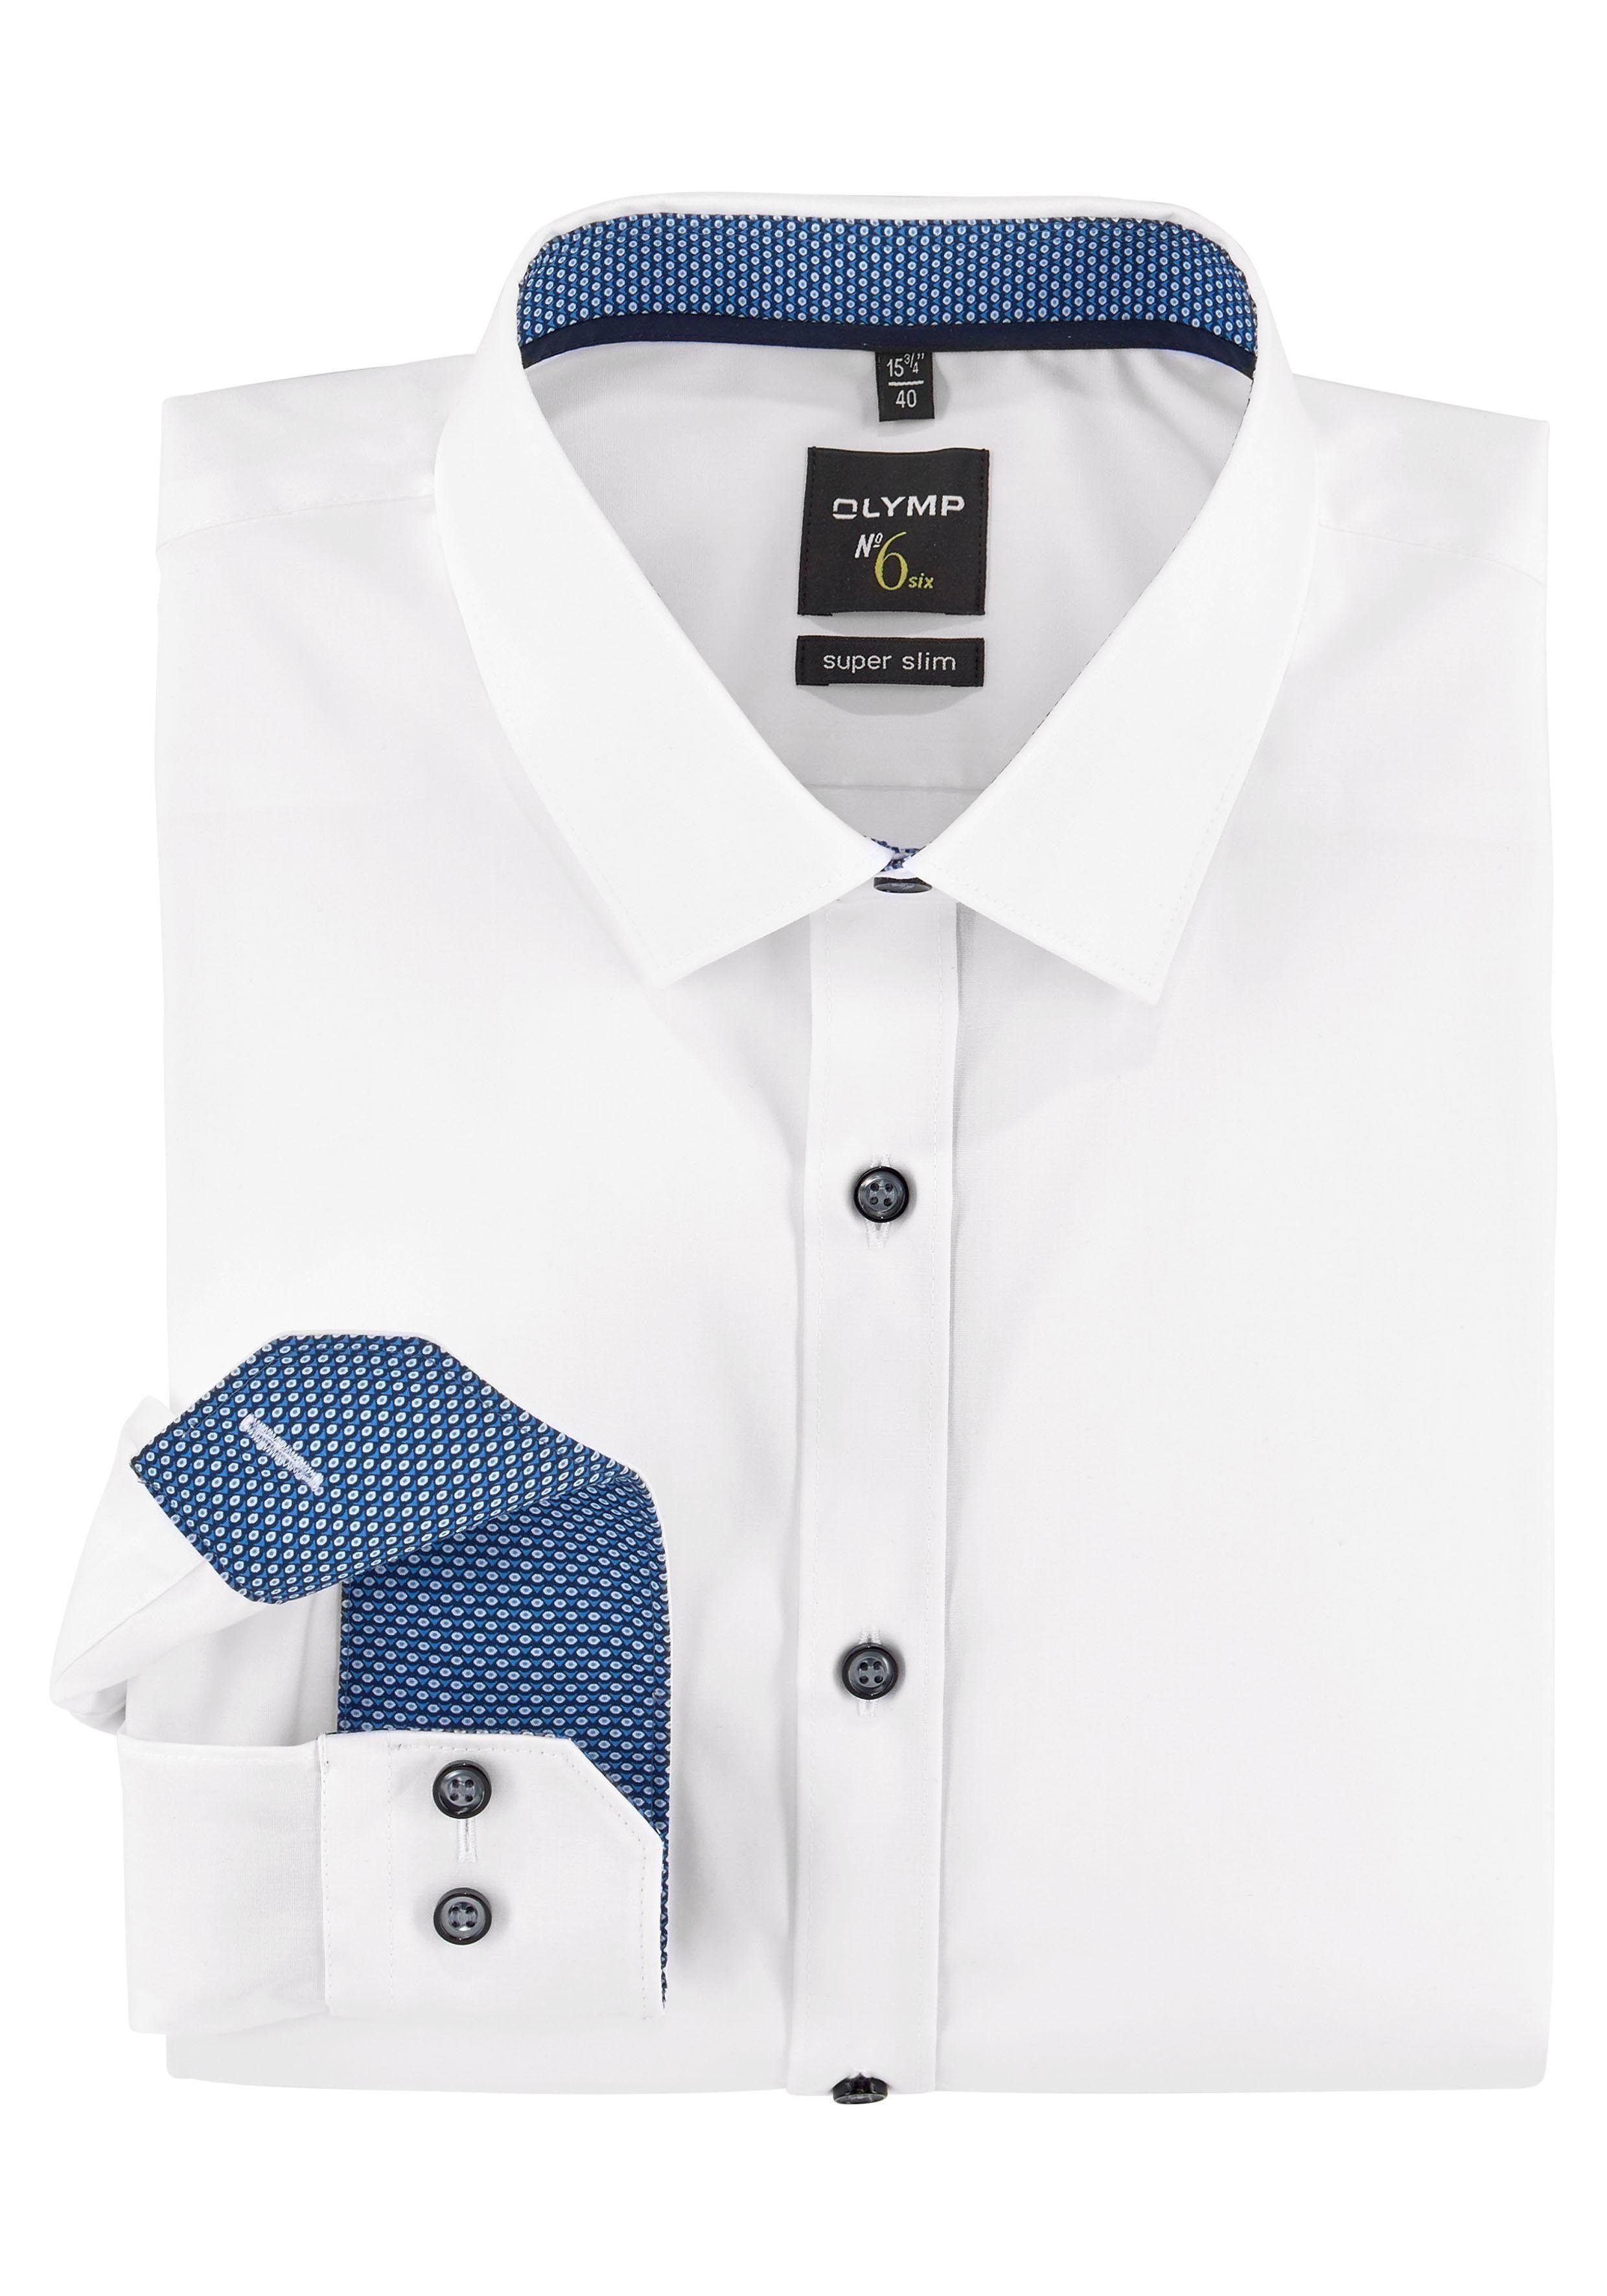 OLYMP Businesshemd No. Six super slim weiß-blau-kontrastfarbene Details